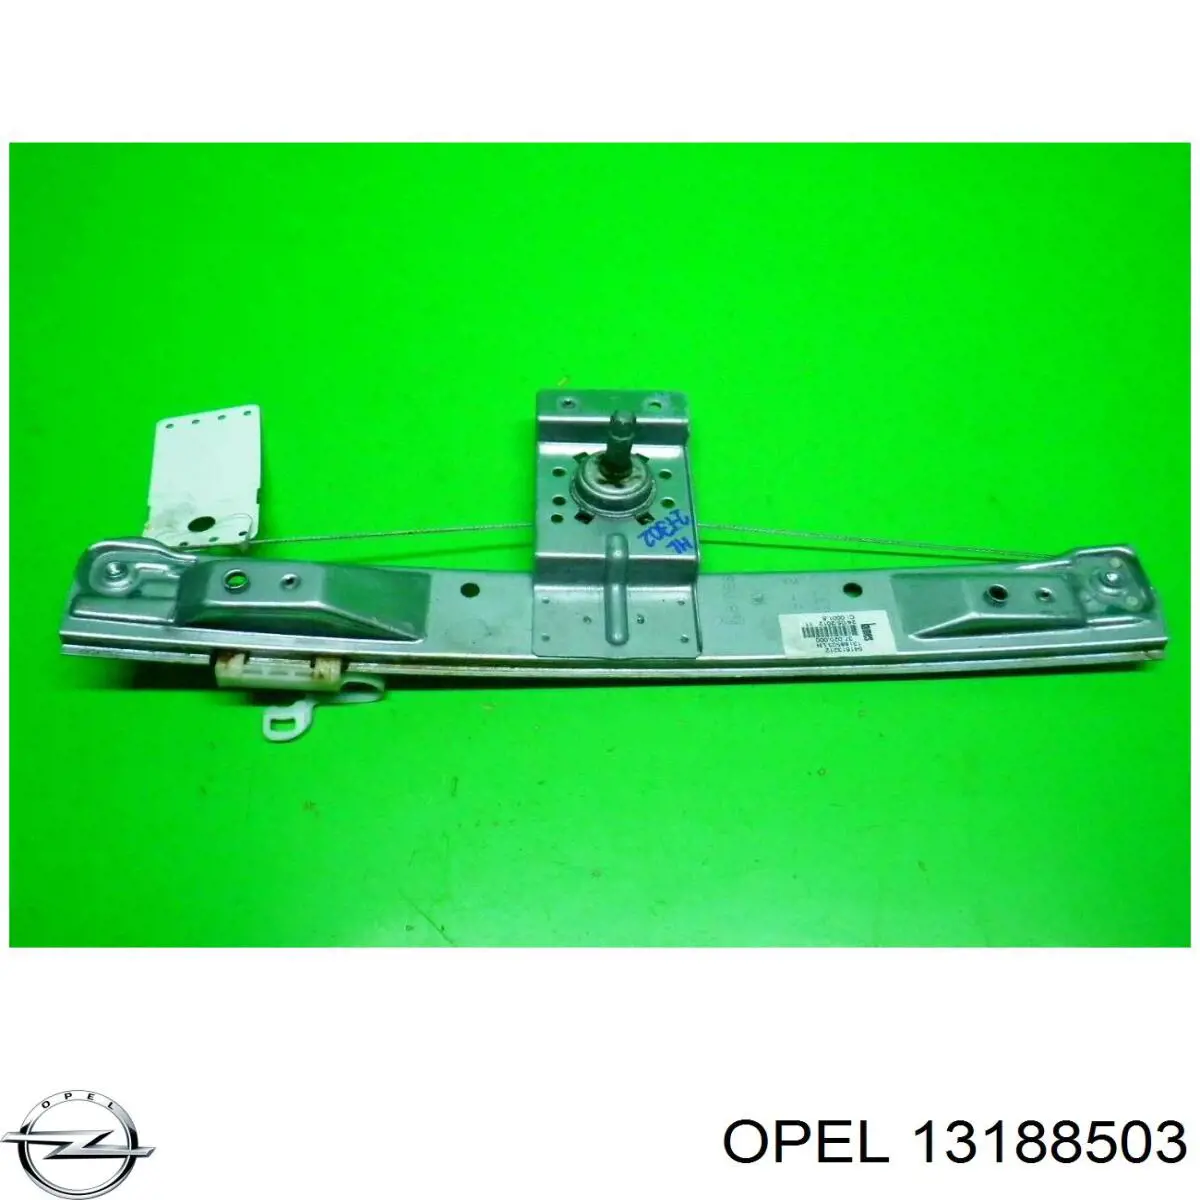 5140105 Opel mecanismo de acionamento de vidro da porta traseira esquerda